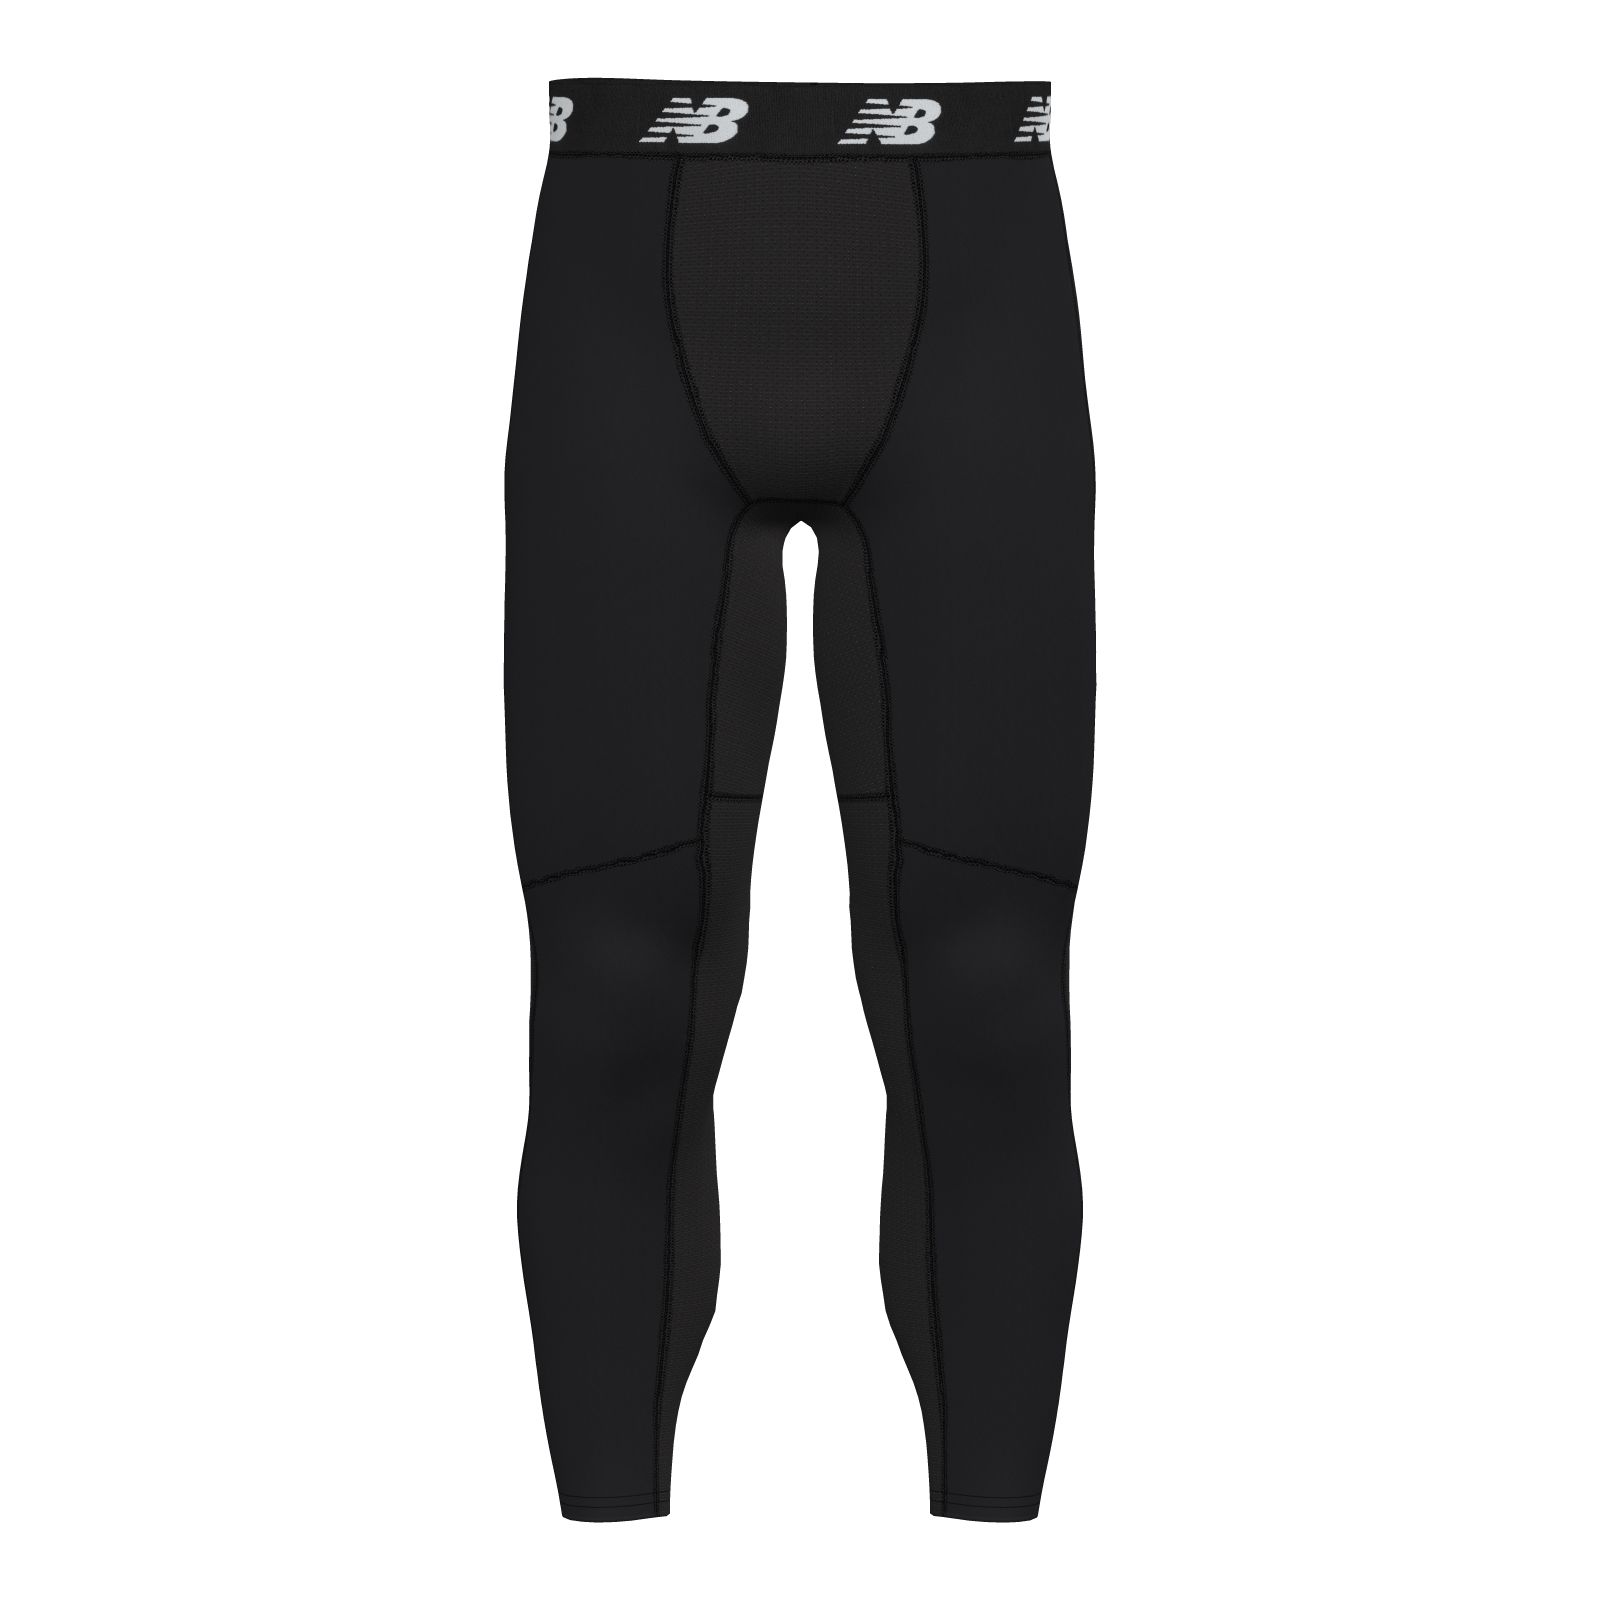 New Balance Fire Resist Micro Fleece Long Underwear AFR201R